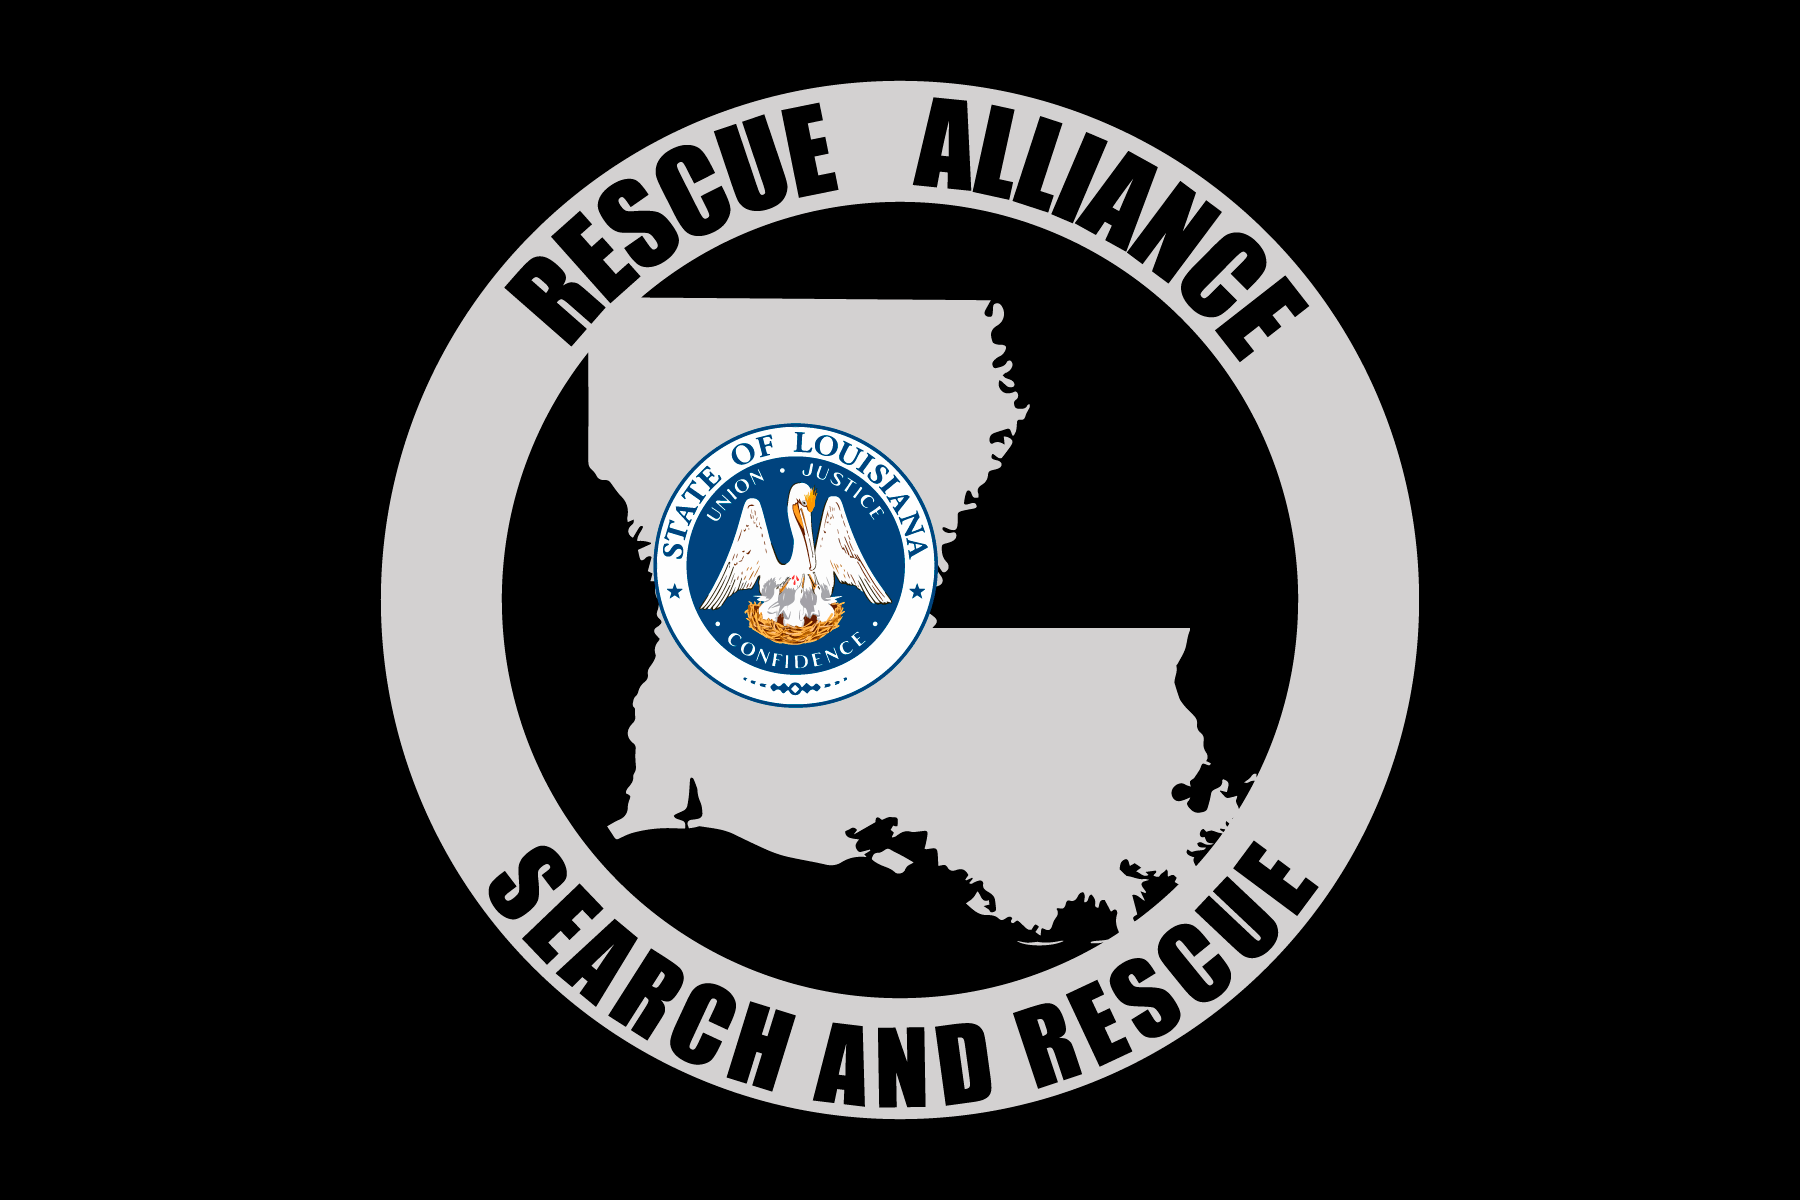 Rescue Alliance logo